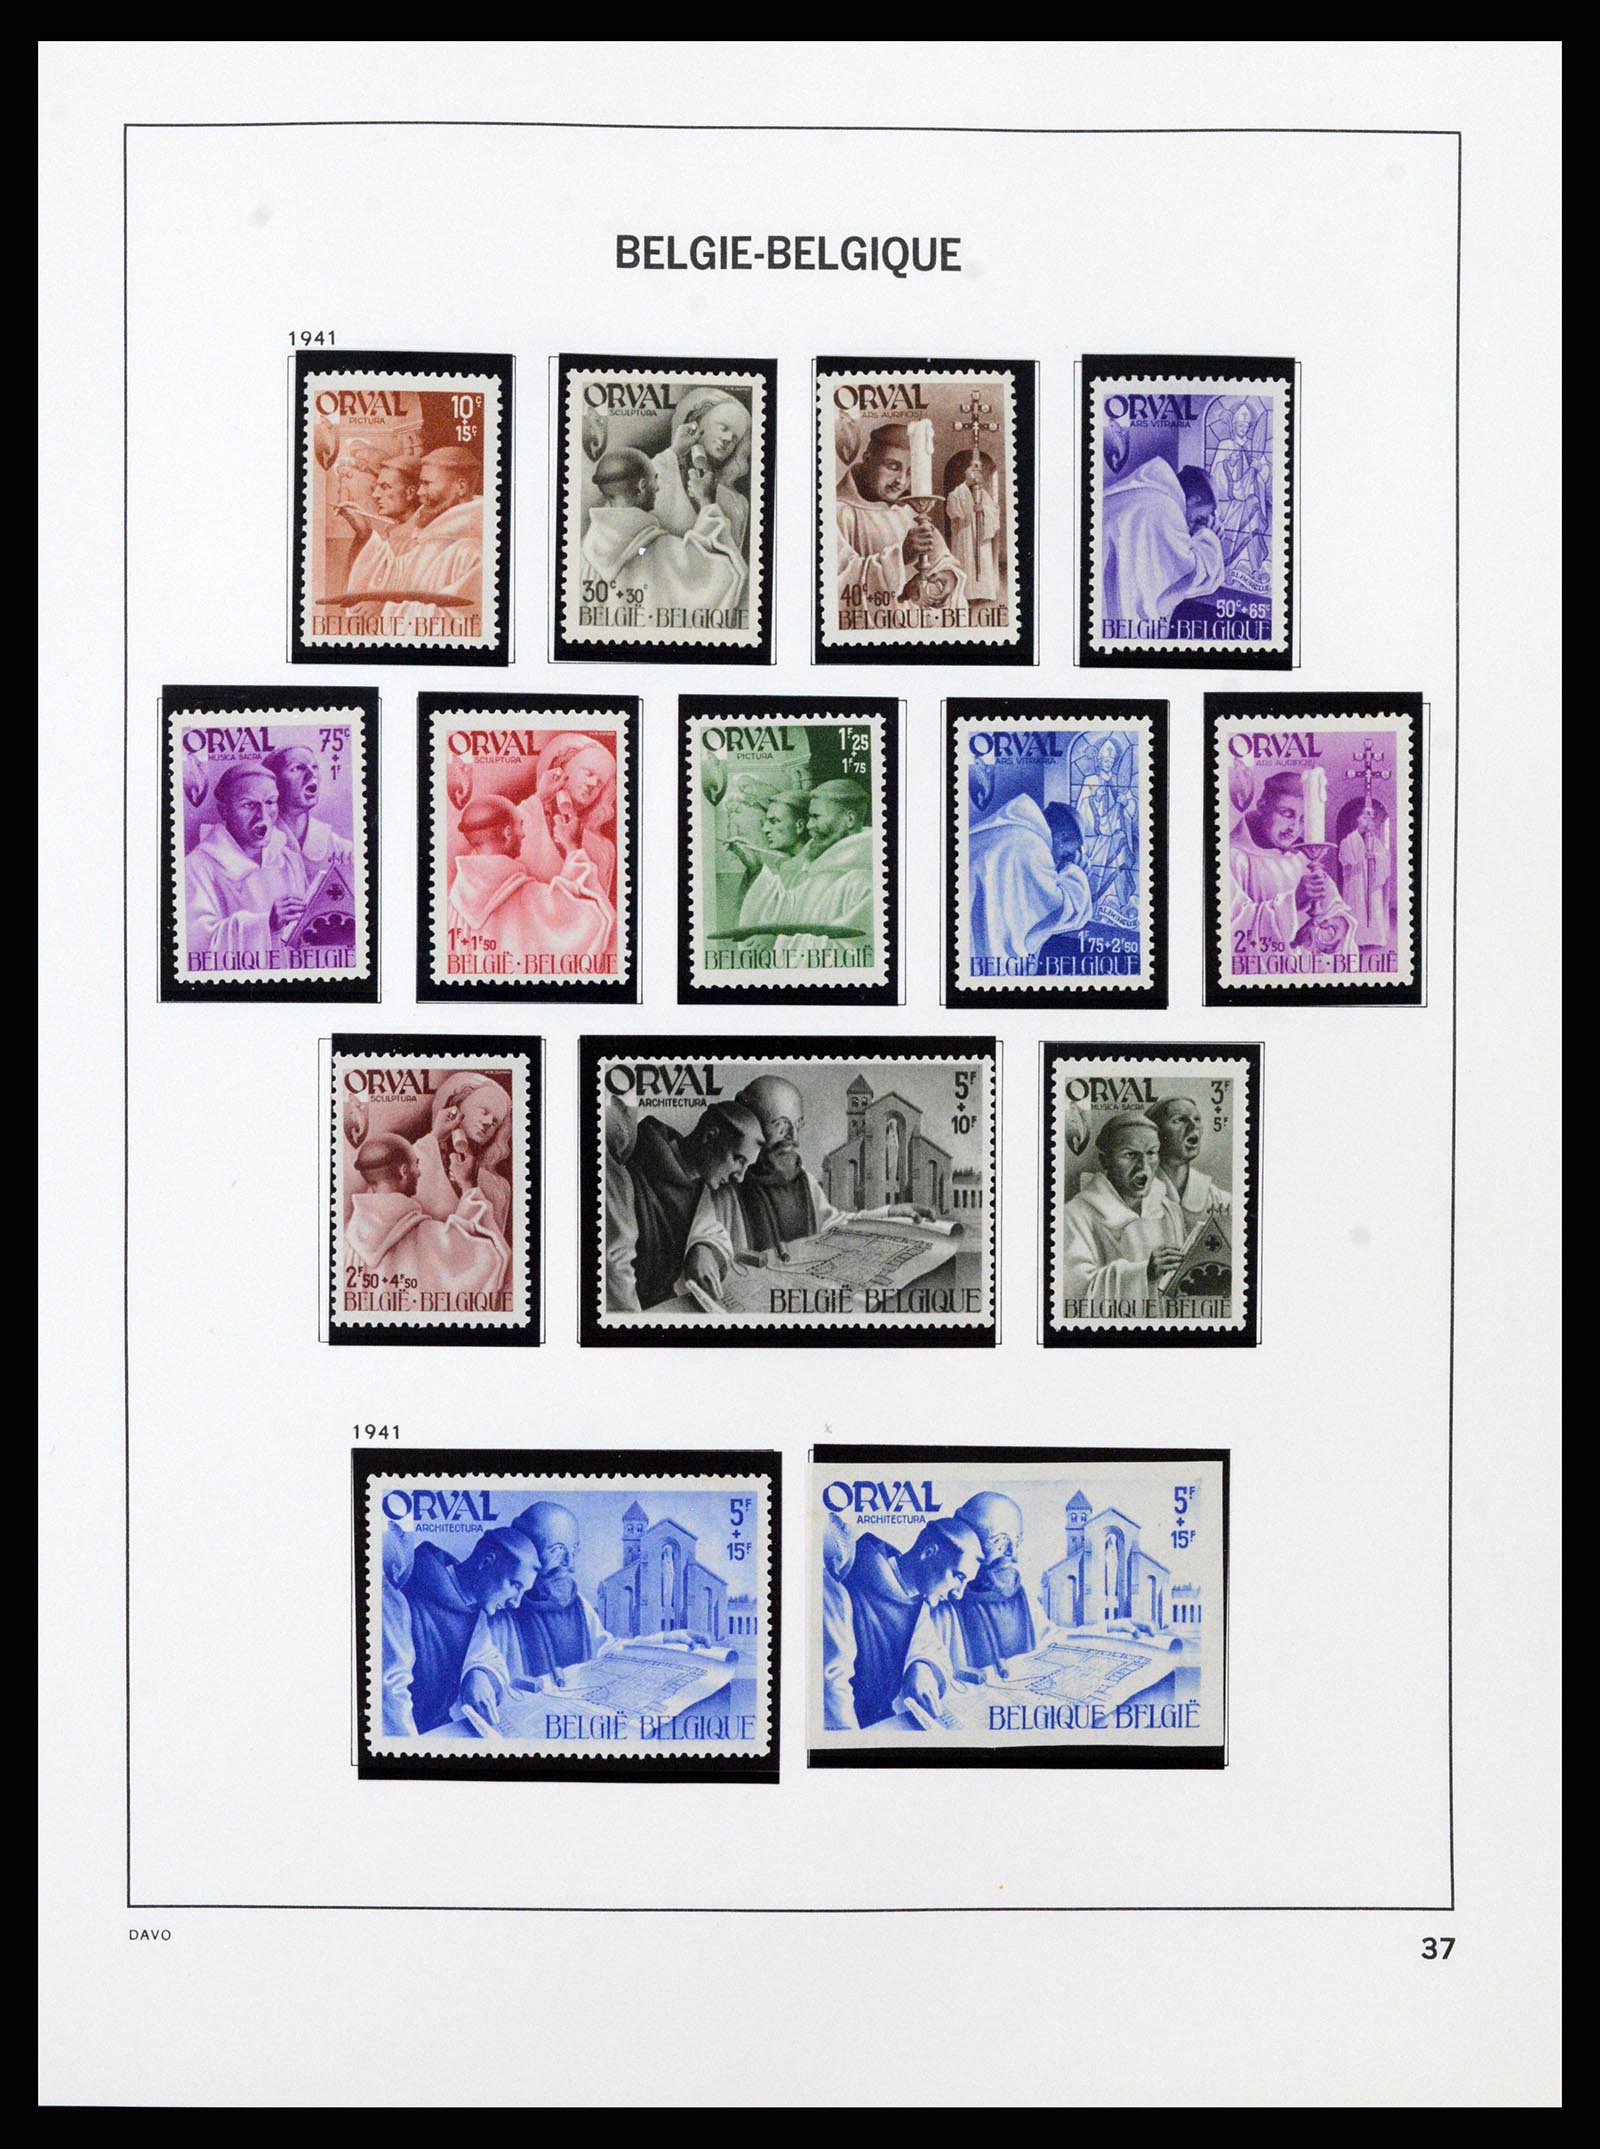 37189 038 - Stamp collection 37189 Belgium 1849-2006.